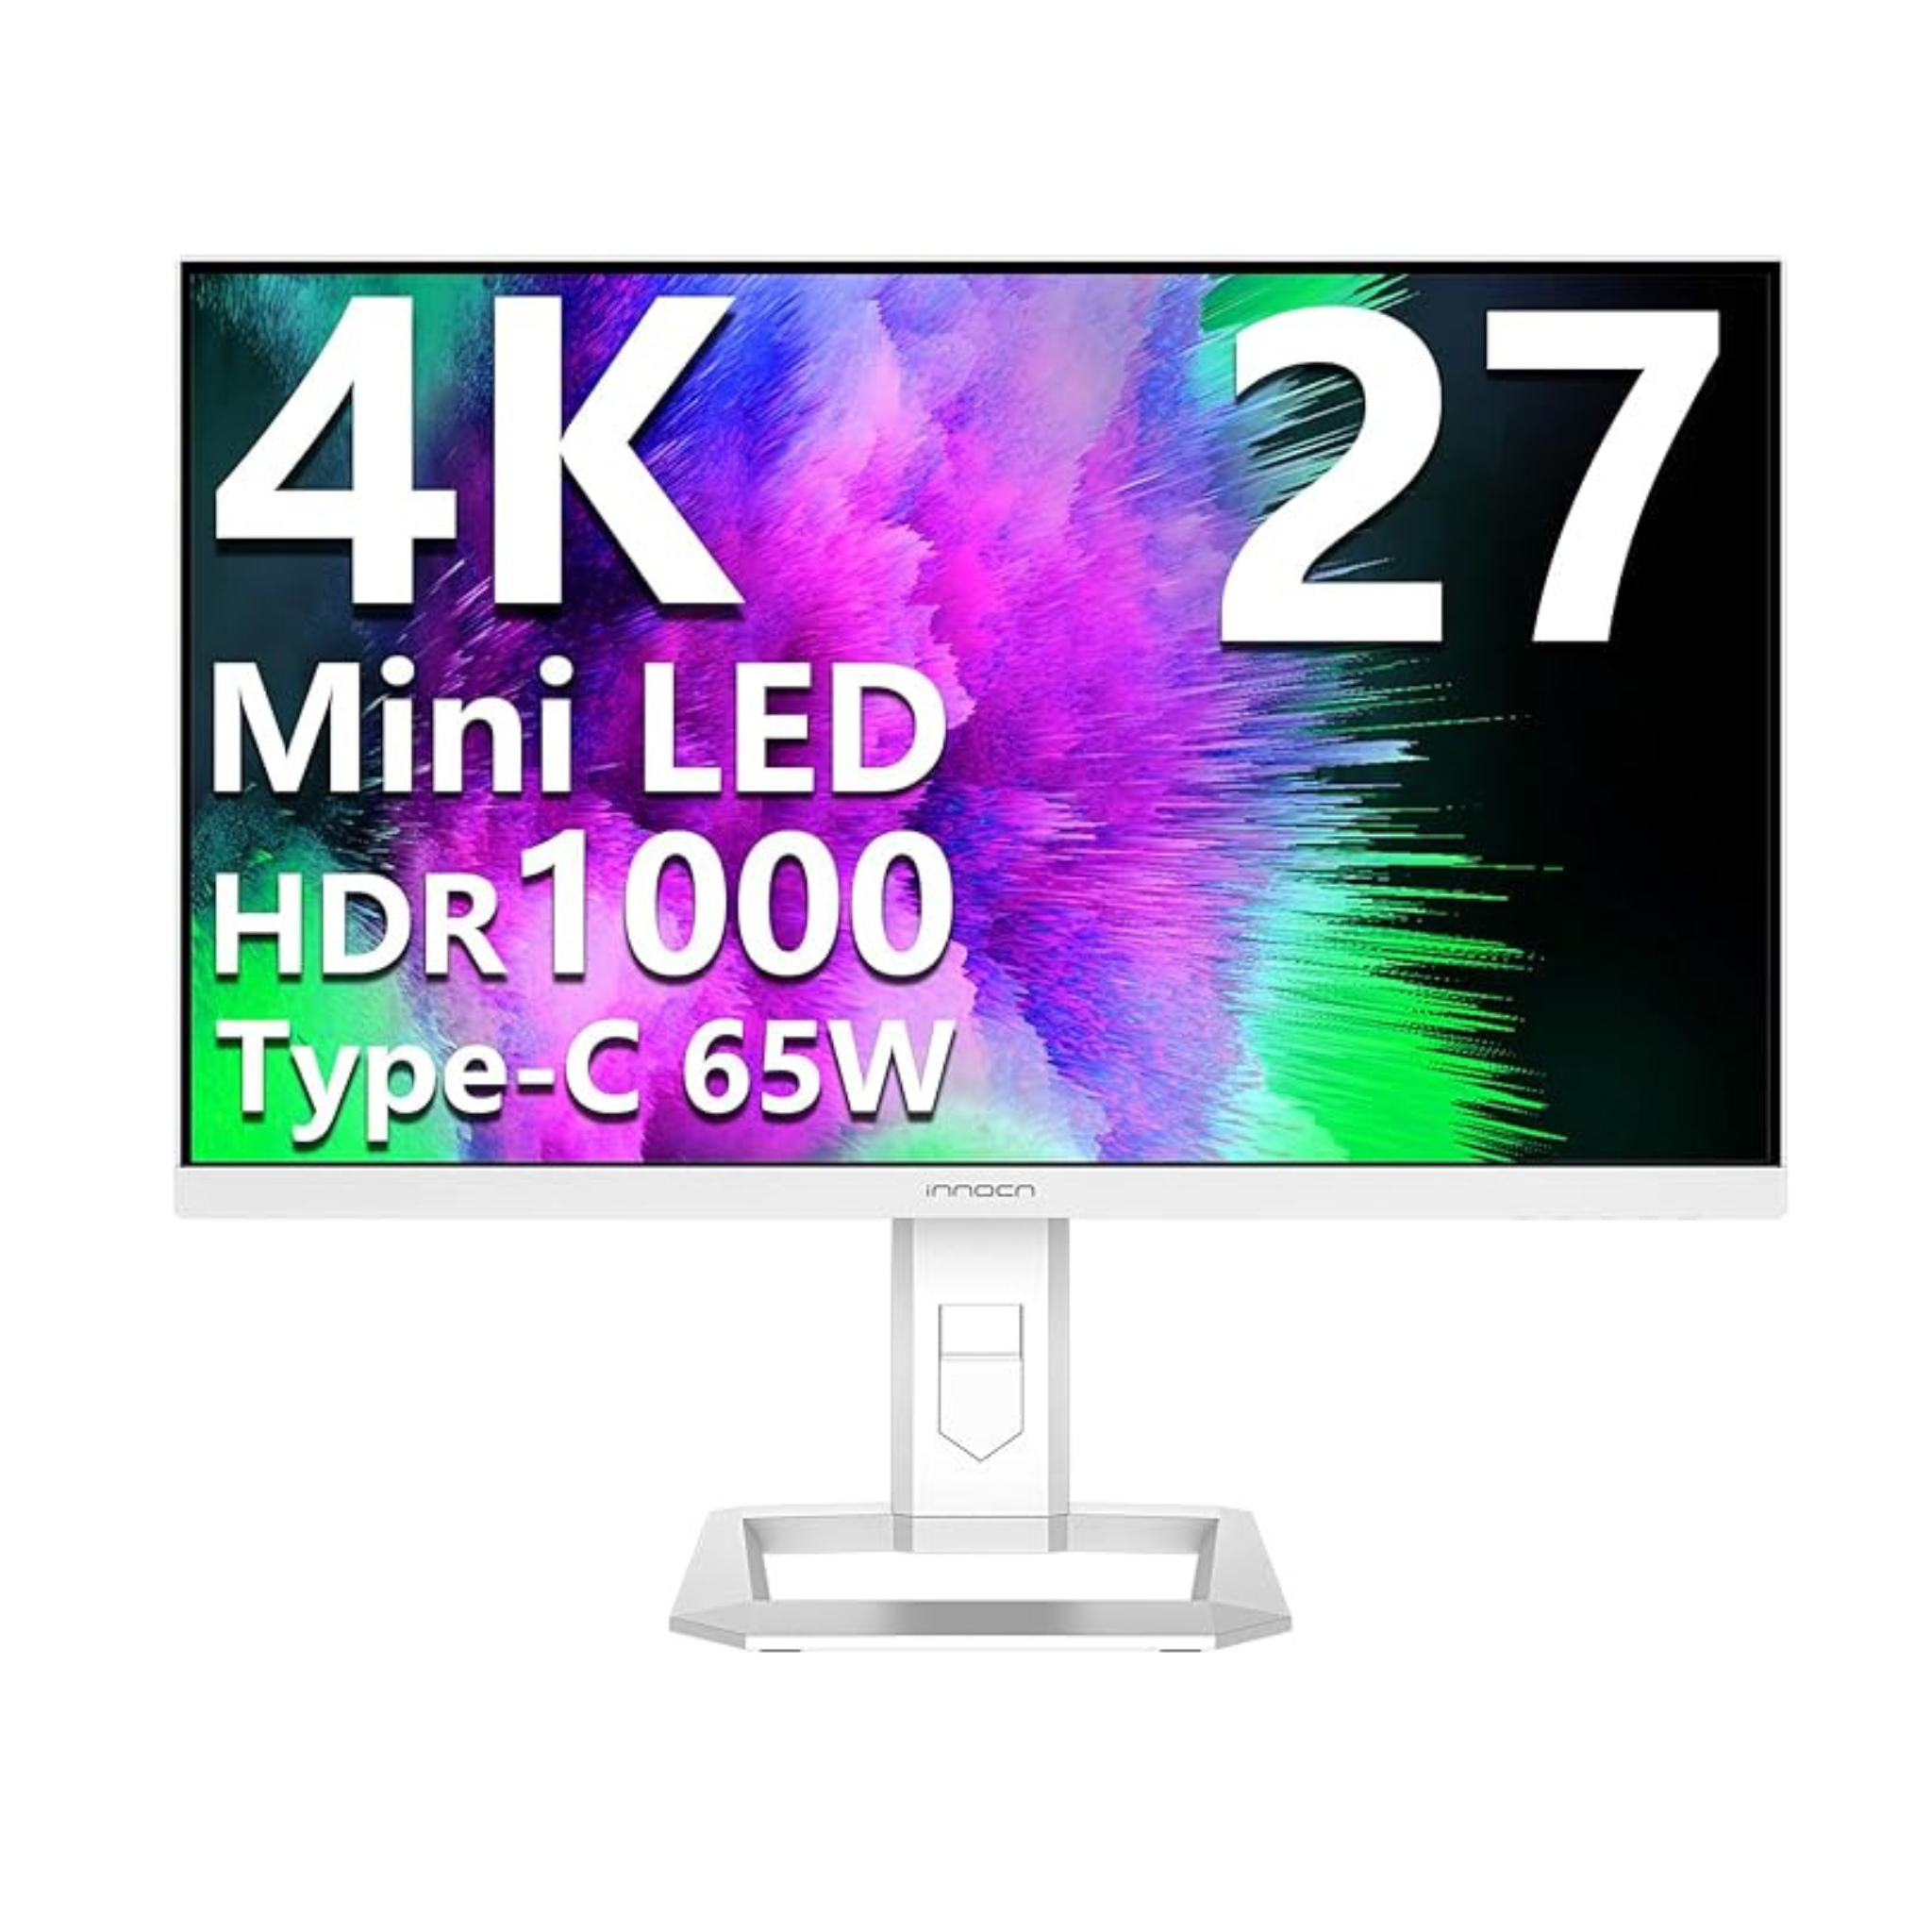 Innocn 27" Mini LED 4K Uhd Monitor